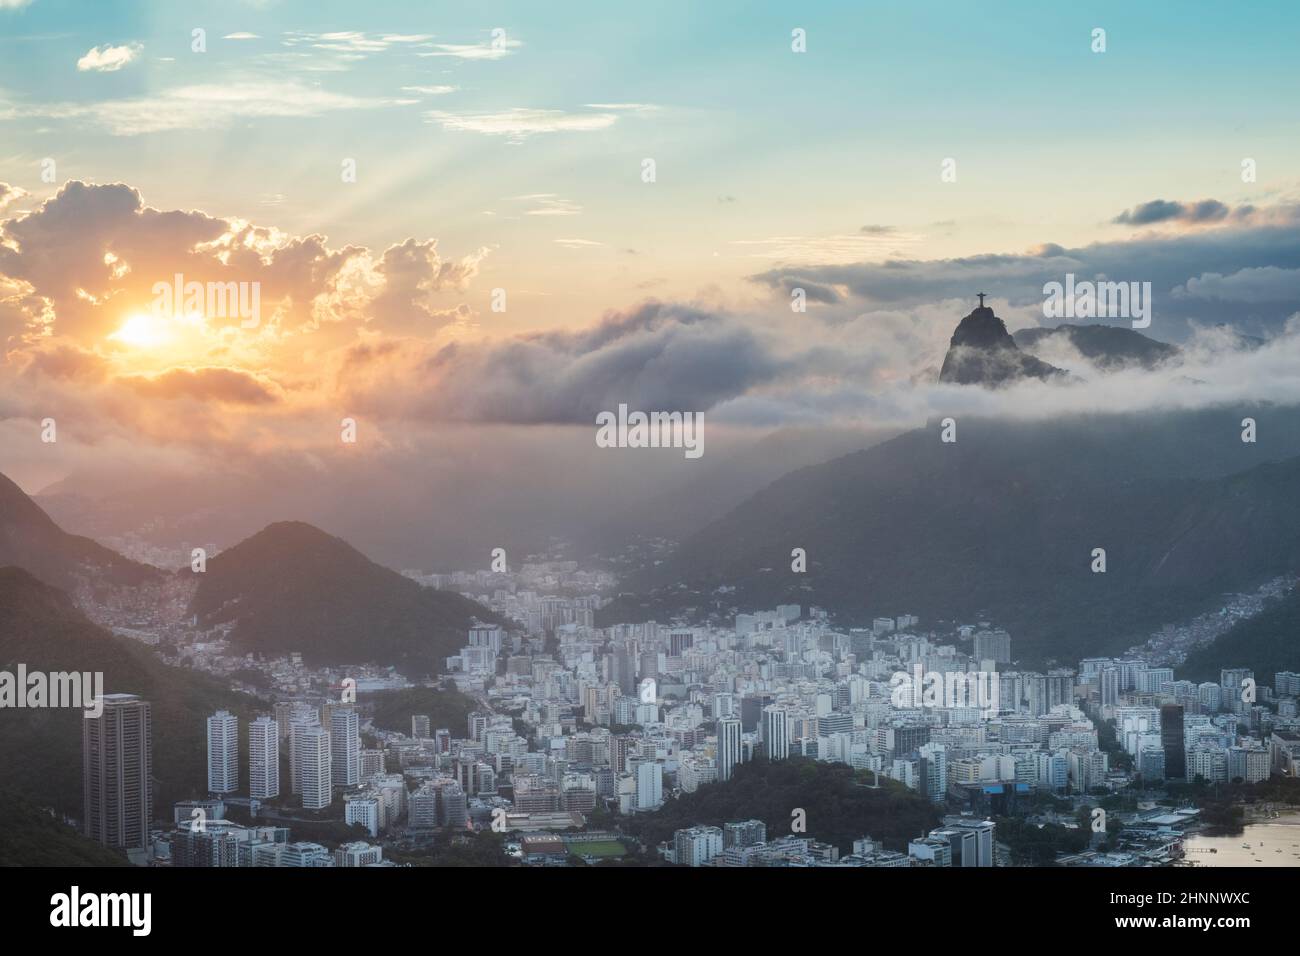 Brazil, Rio de Janeiro. Urban skyline, Botafogo neighborhood, apartments & commercial buildings, the Christ statue on Corcovado, the mountains & sea. Stock Photo